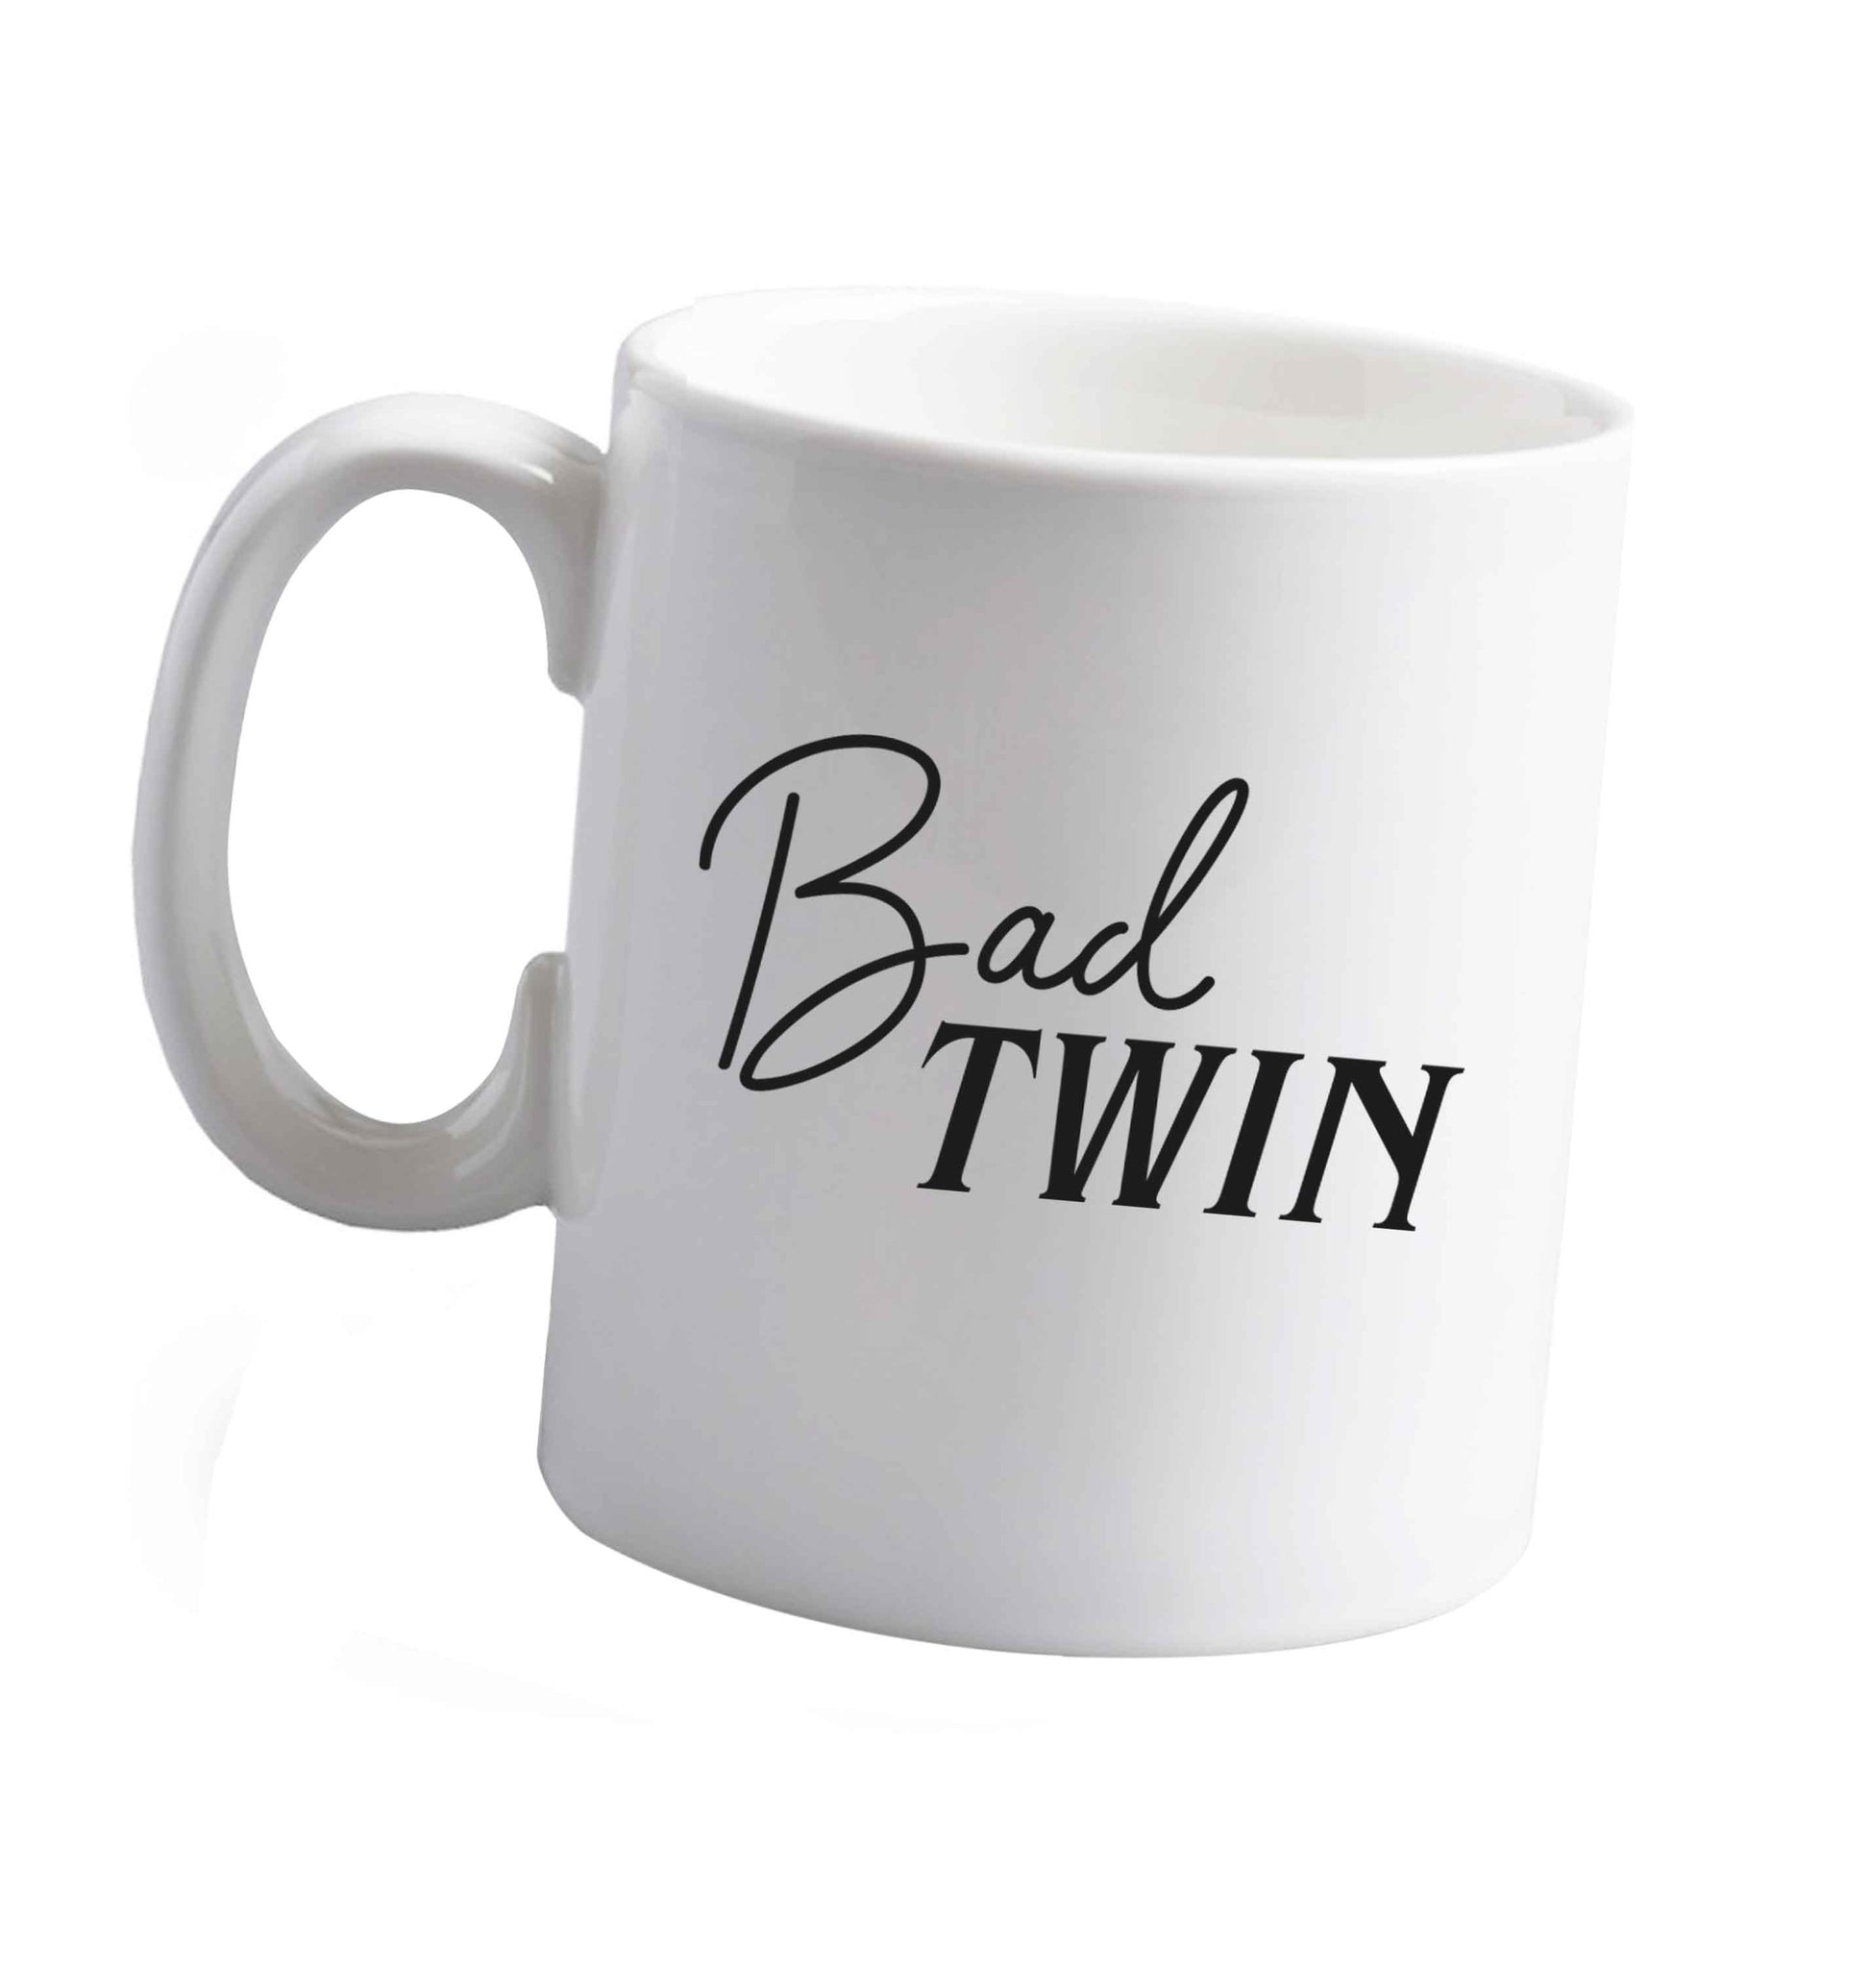 10 oz Bad twin ceramic mug right handed